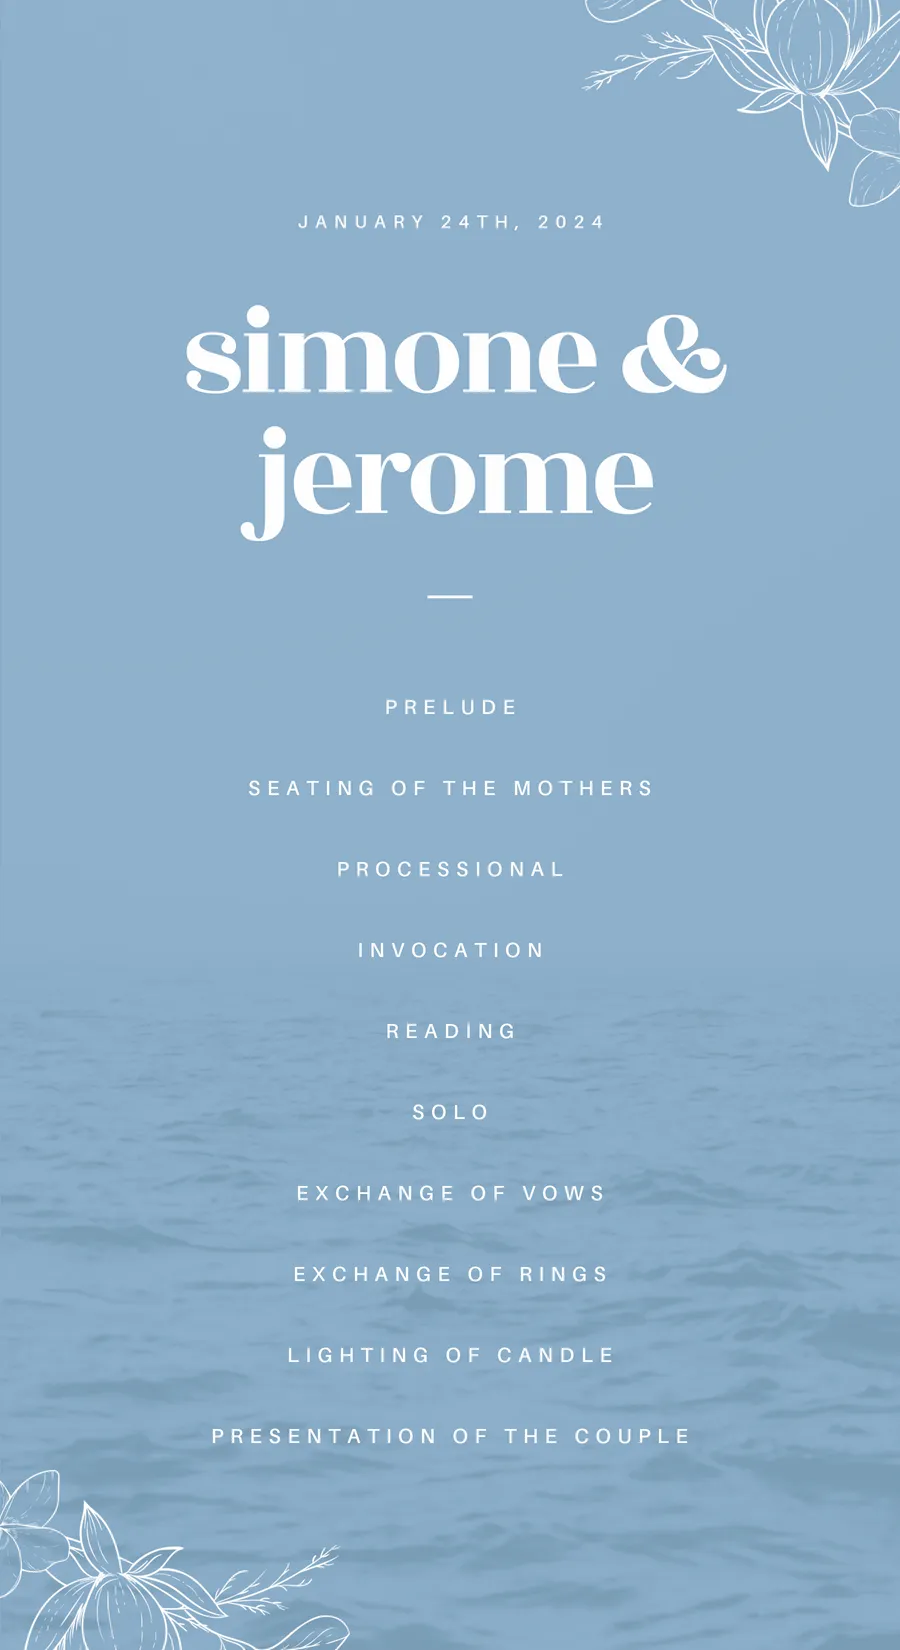 Simone & Jerome cards-wedding template